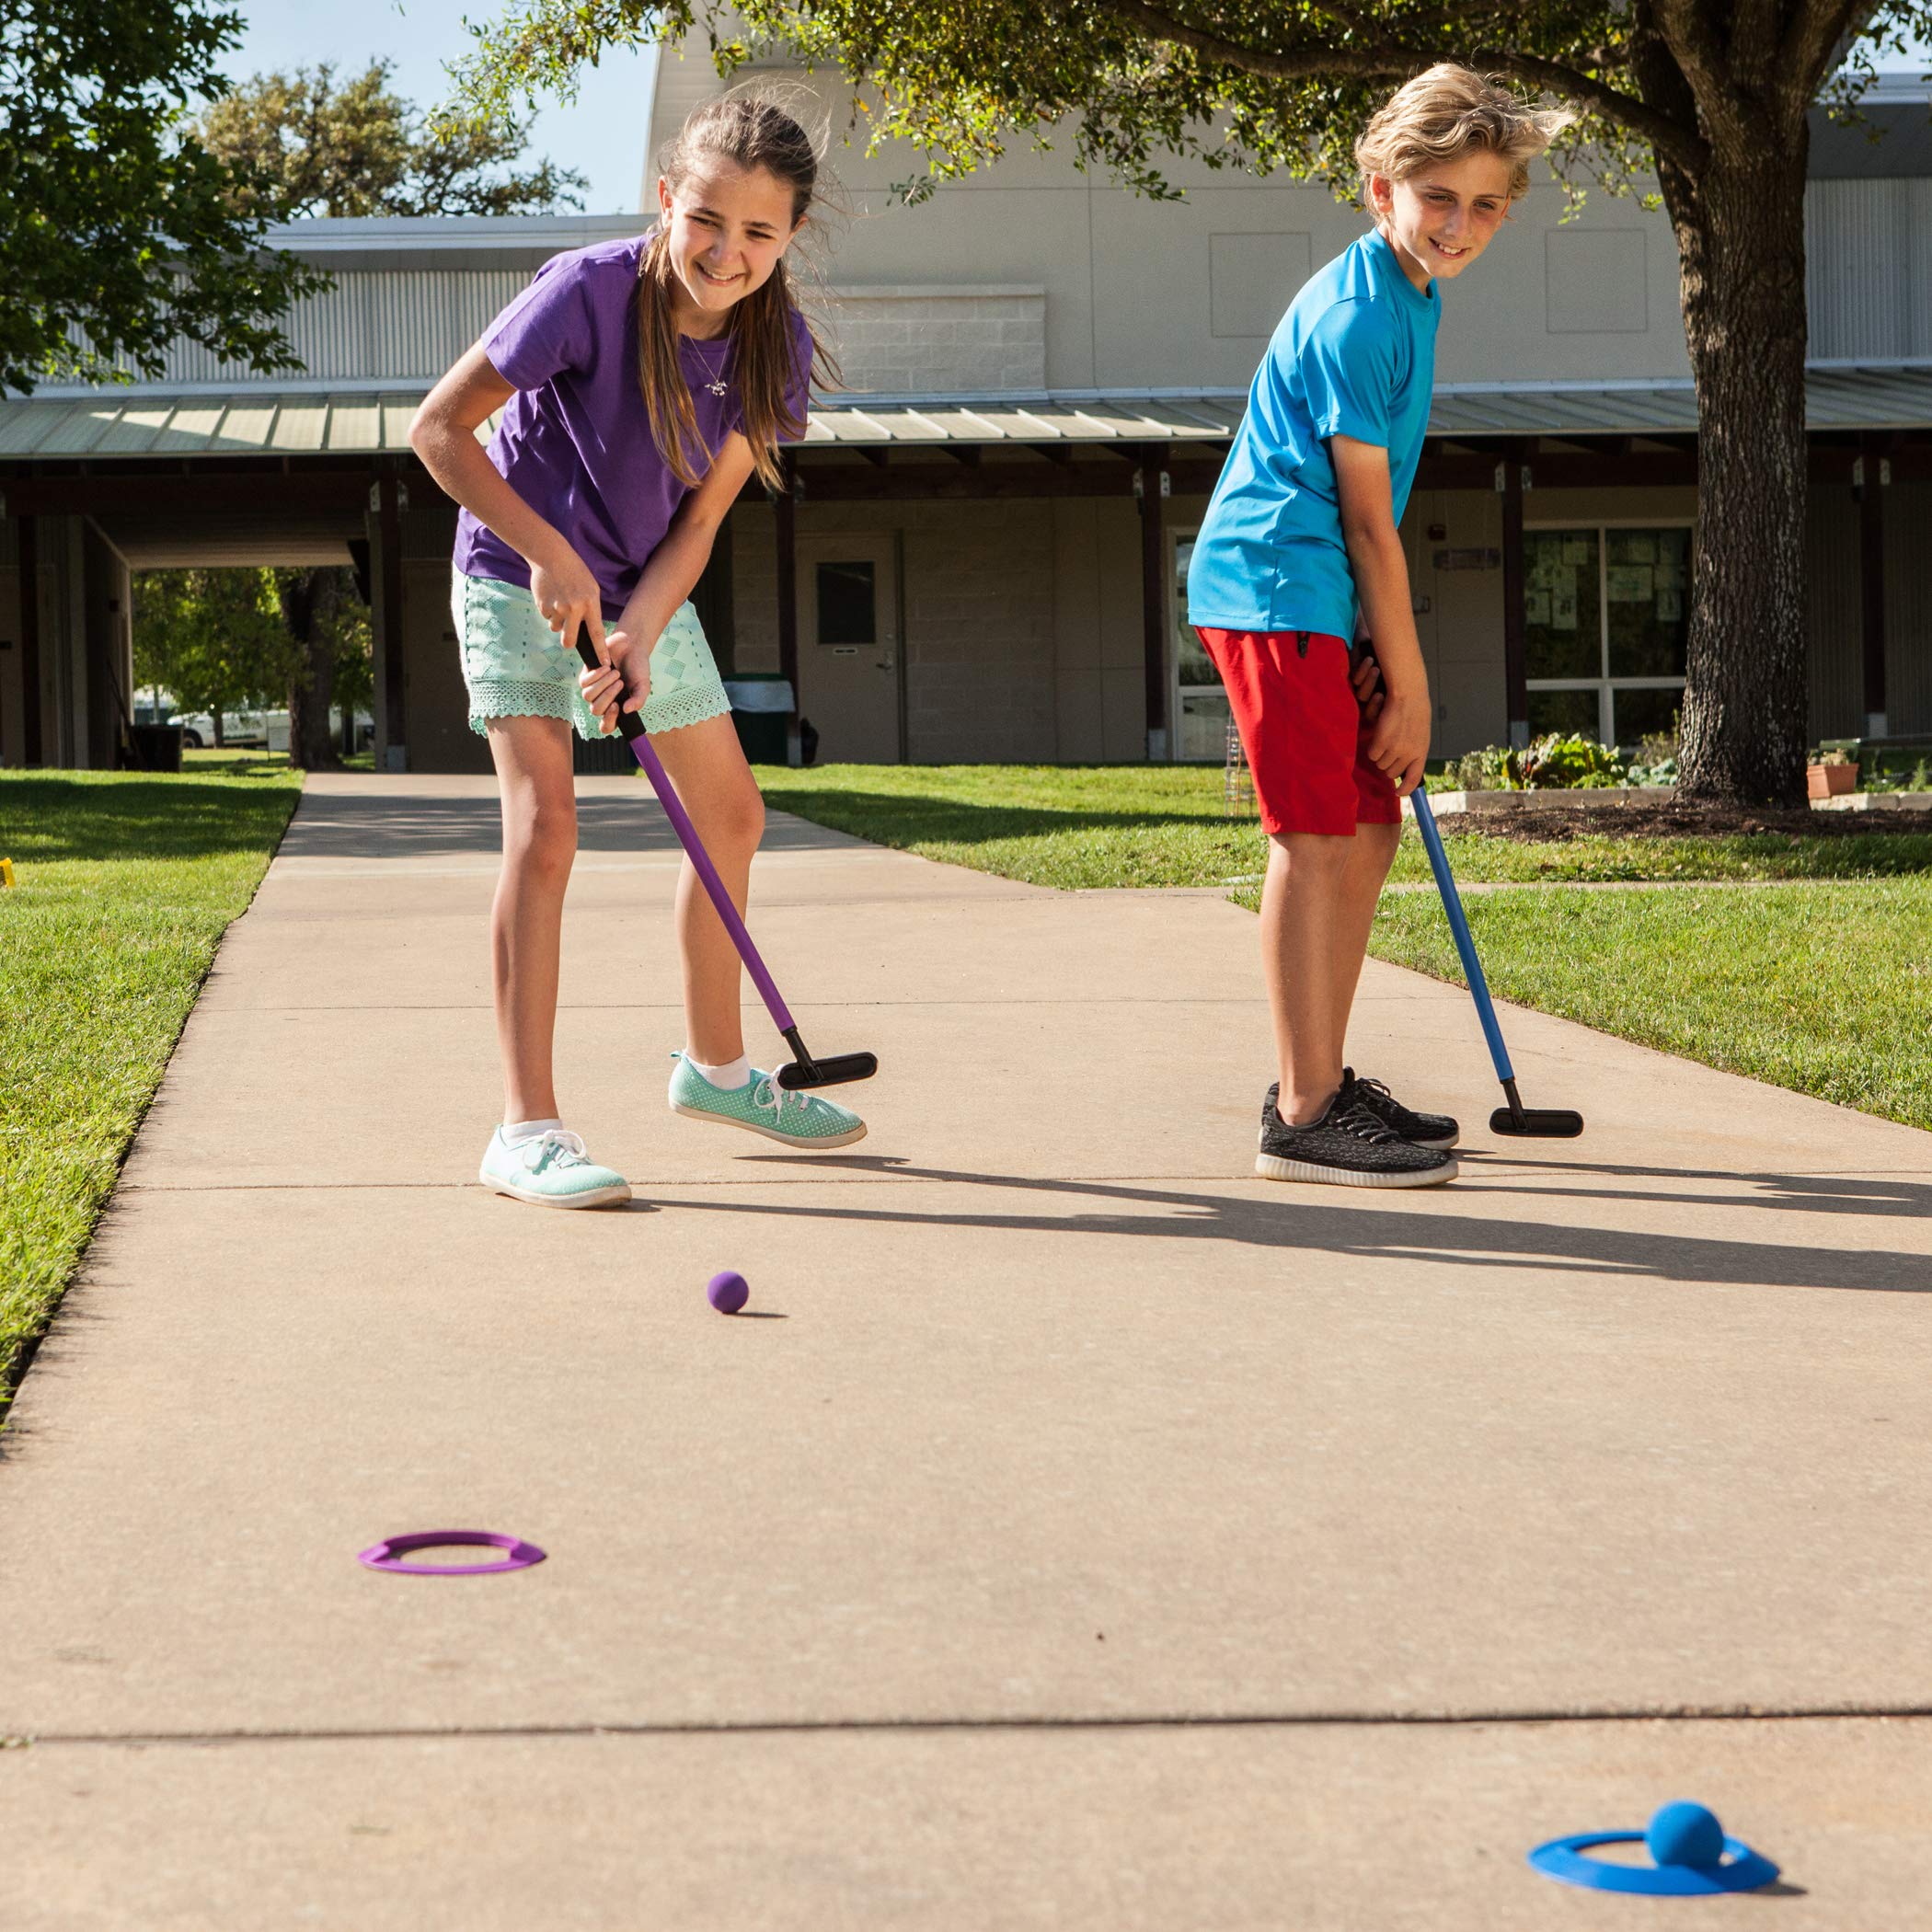 Champion Sports Mini Golf Clubs: Multi Colored Putt Putt Miniature Golfing Set for Kids - 6 Putters 18 Holes & 18 Balls